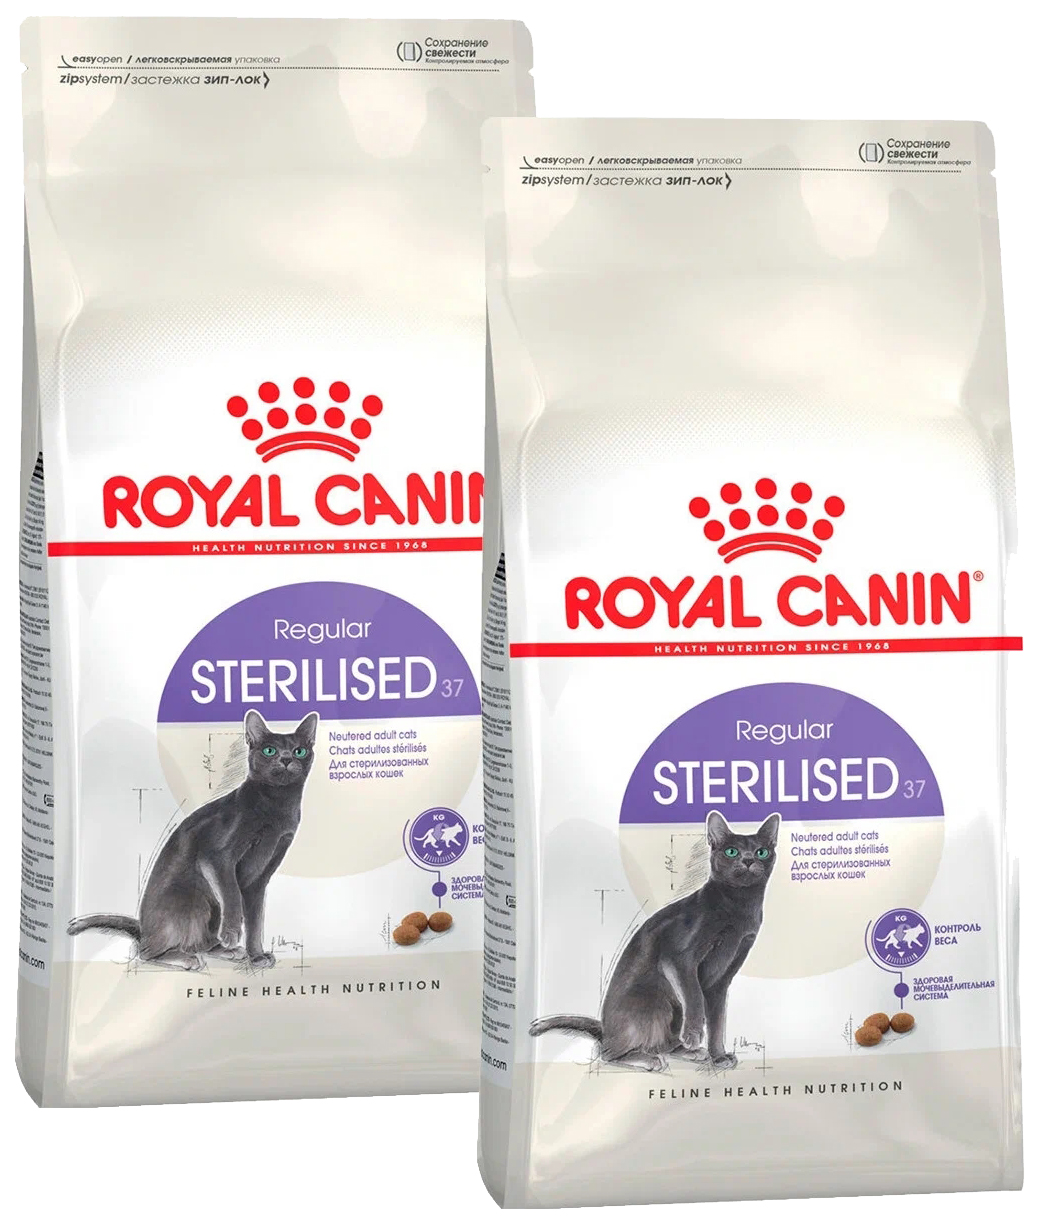 фото Сухой корм для кошек и котов royal canin sterilised 37, 2 шт по 0,2 кг